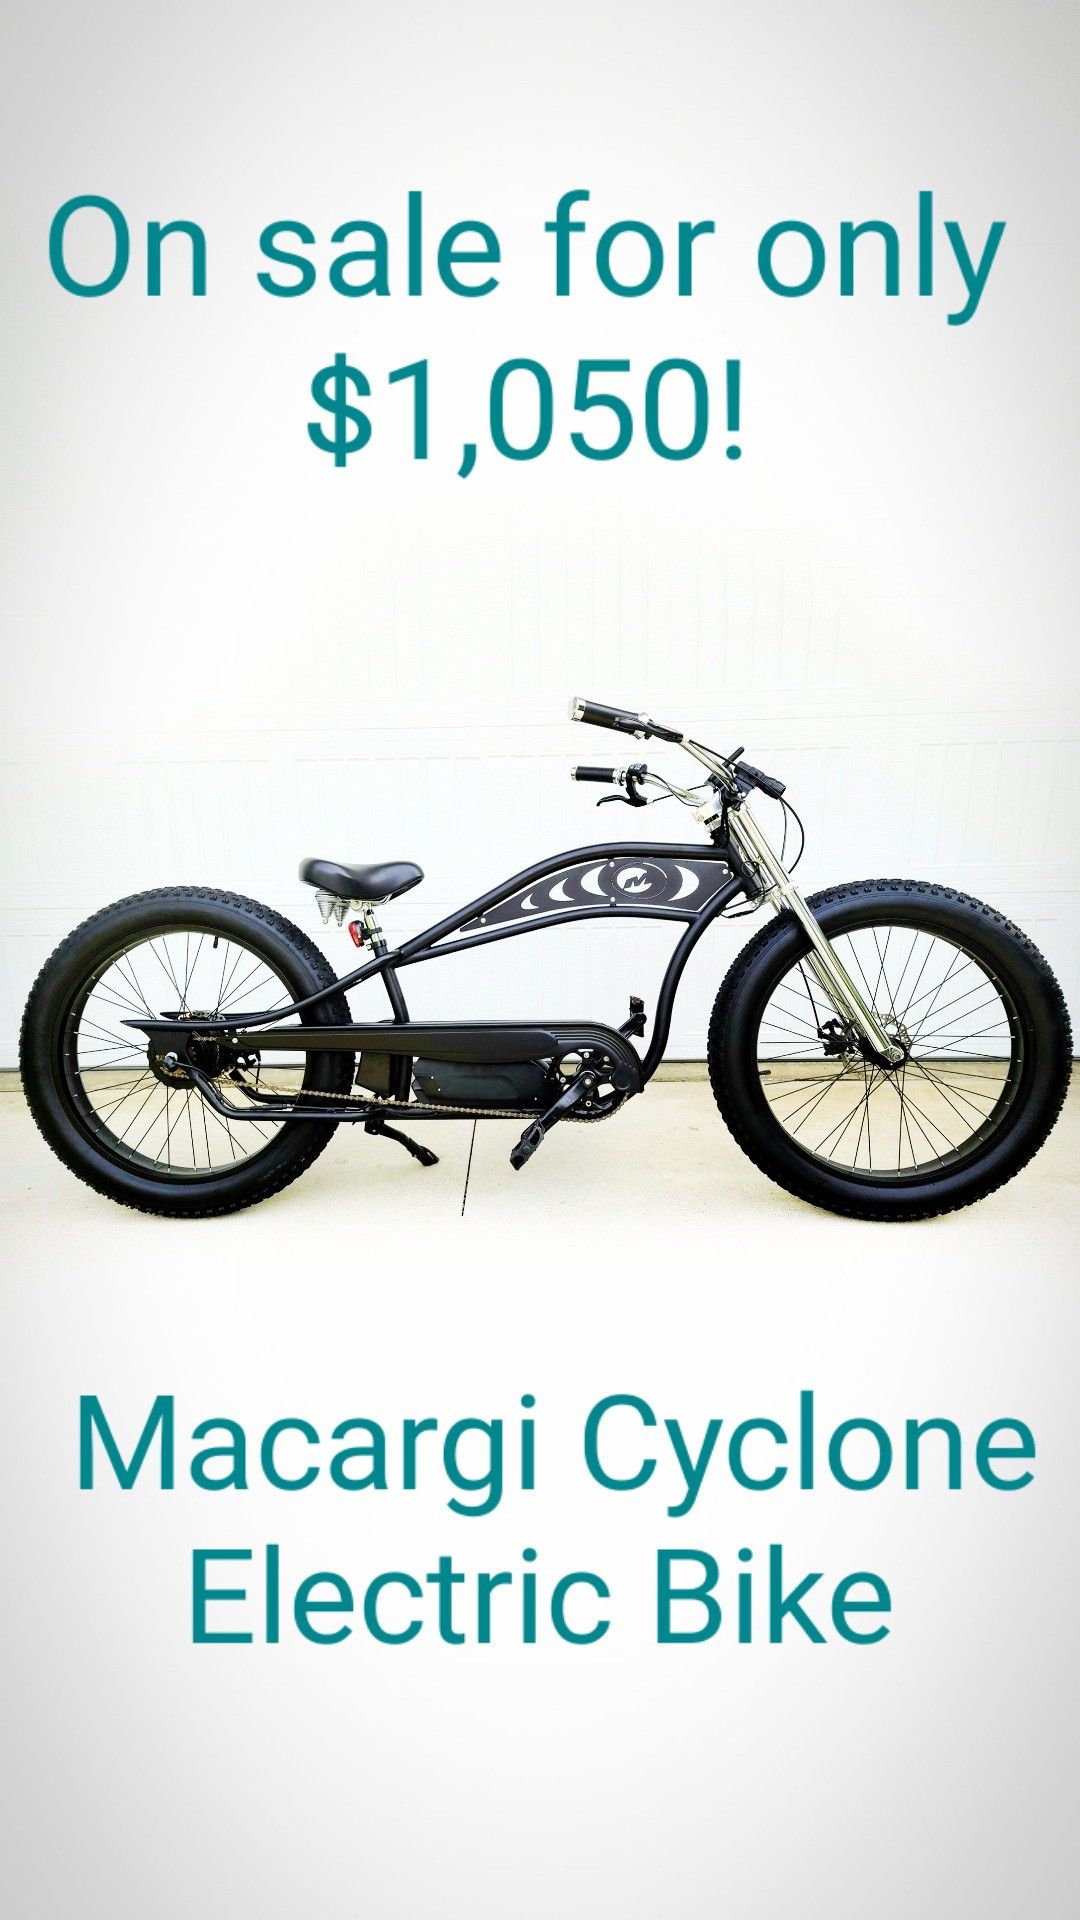 Electric Bike Micargi Cyclone